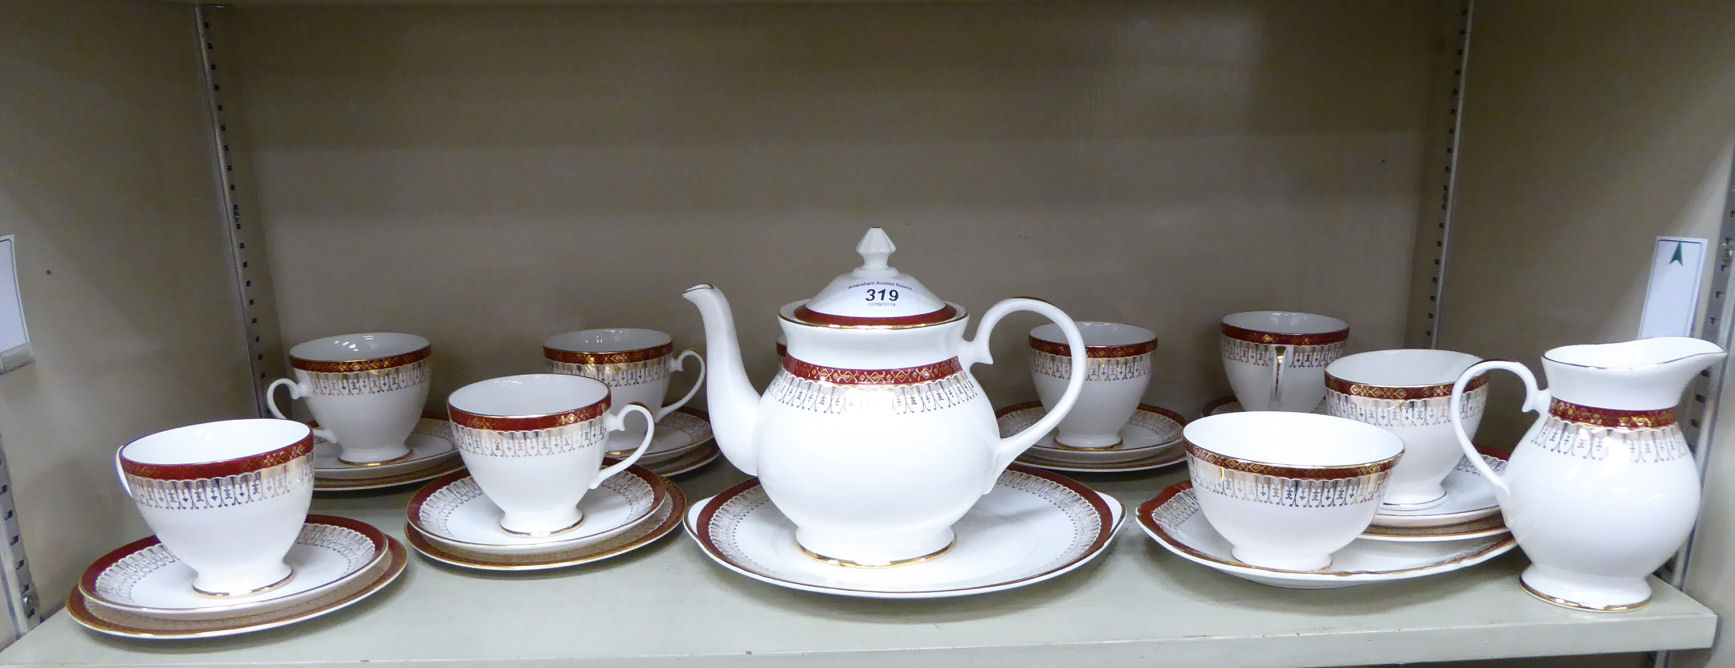 Royal Grafton fine bone china Majestic pattern teaware,